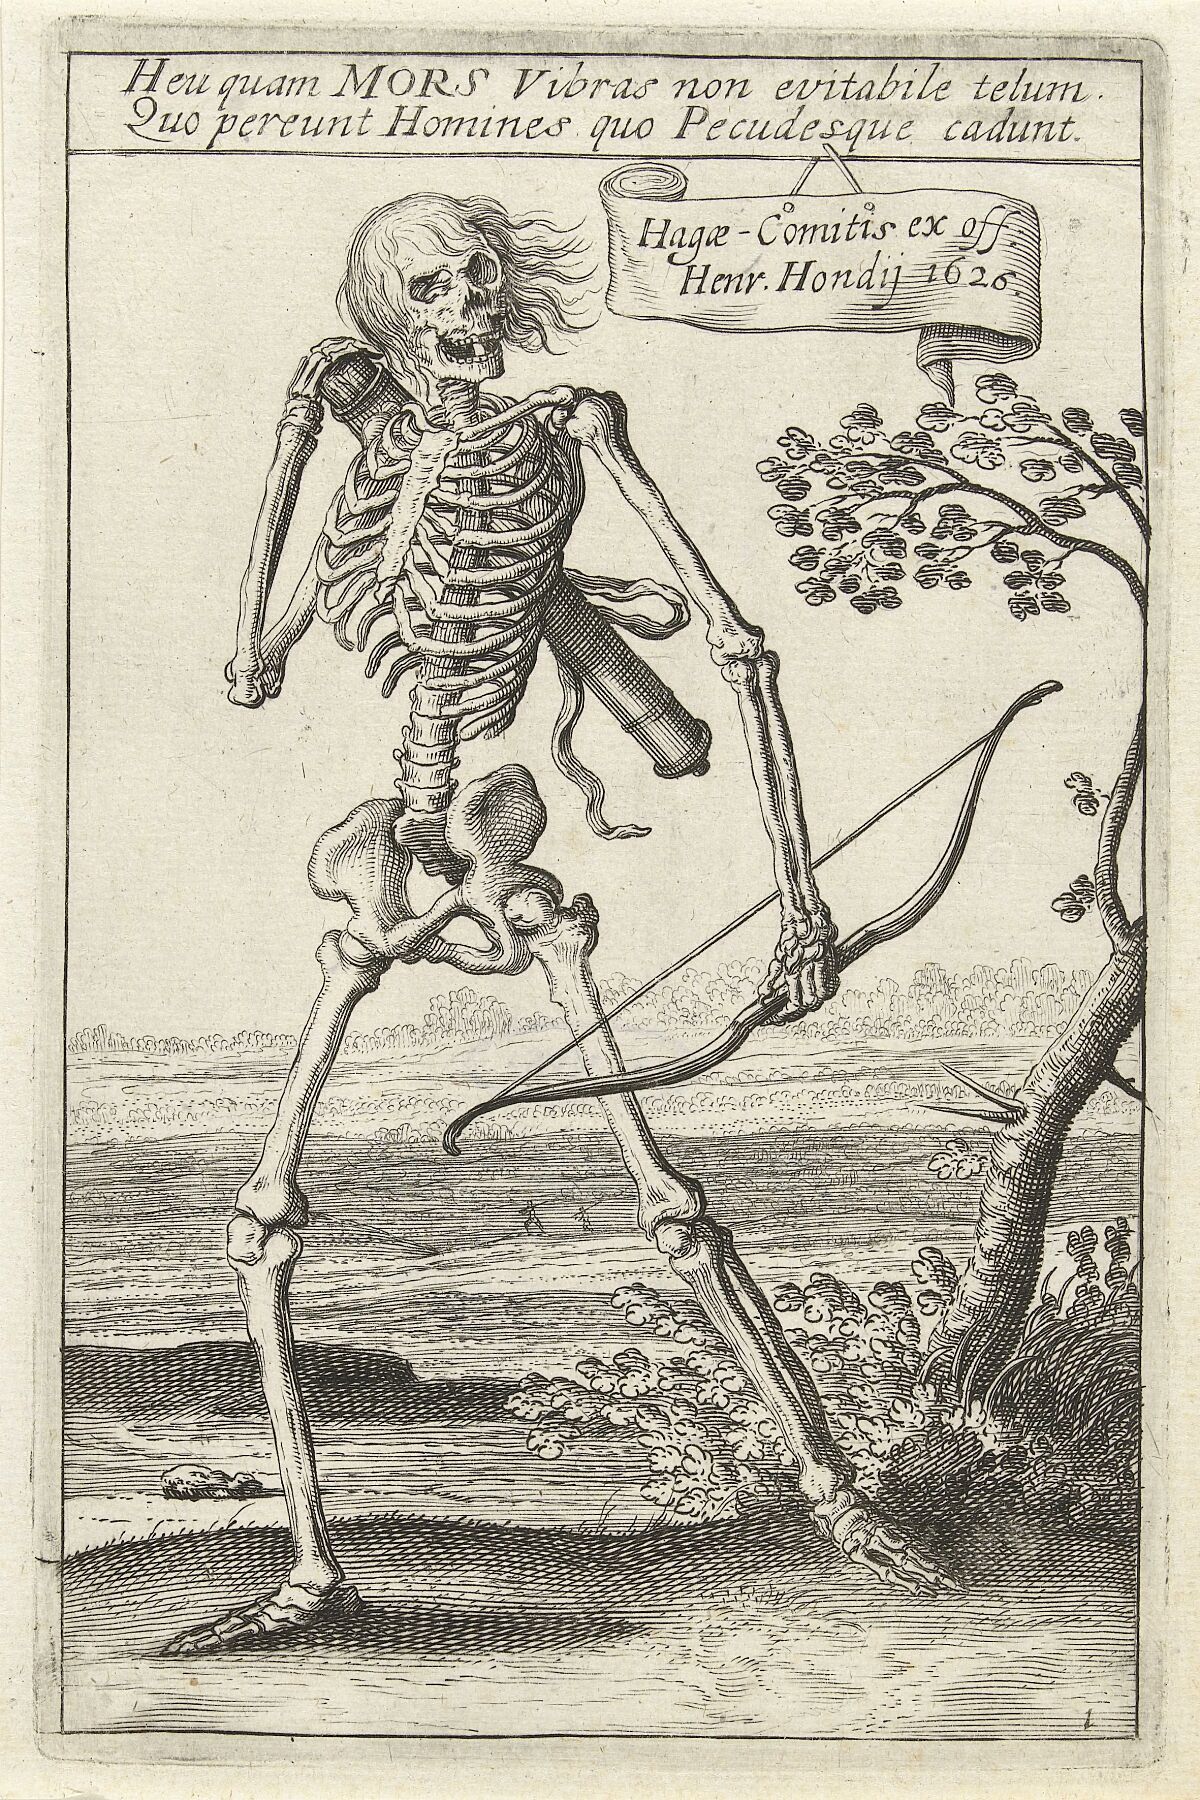 Skeleton with Bow and Arrow, Hendrick Hondius, after Teodoro Filippo di Liagno, 1626